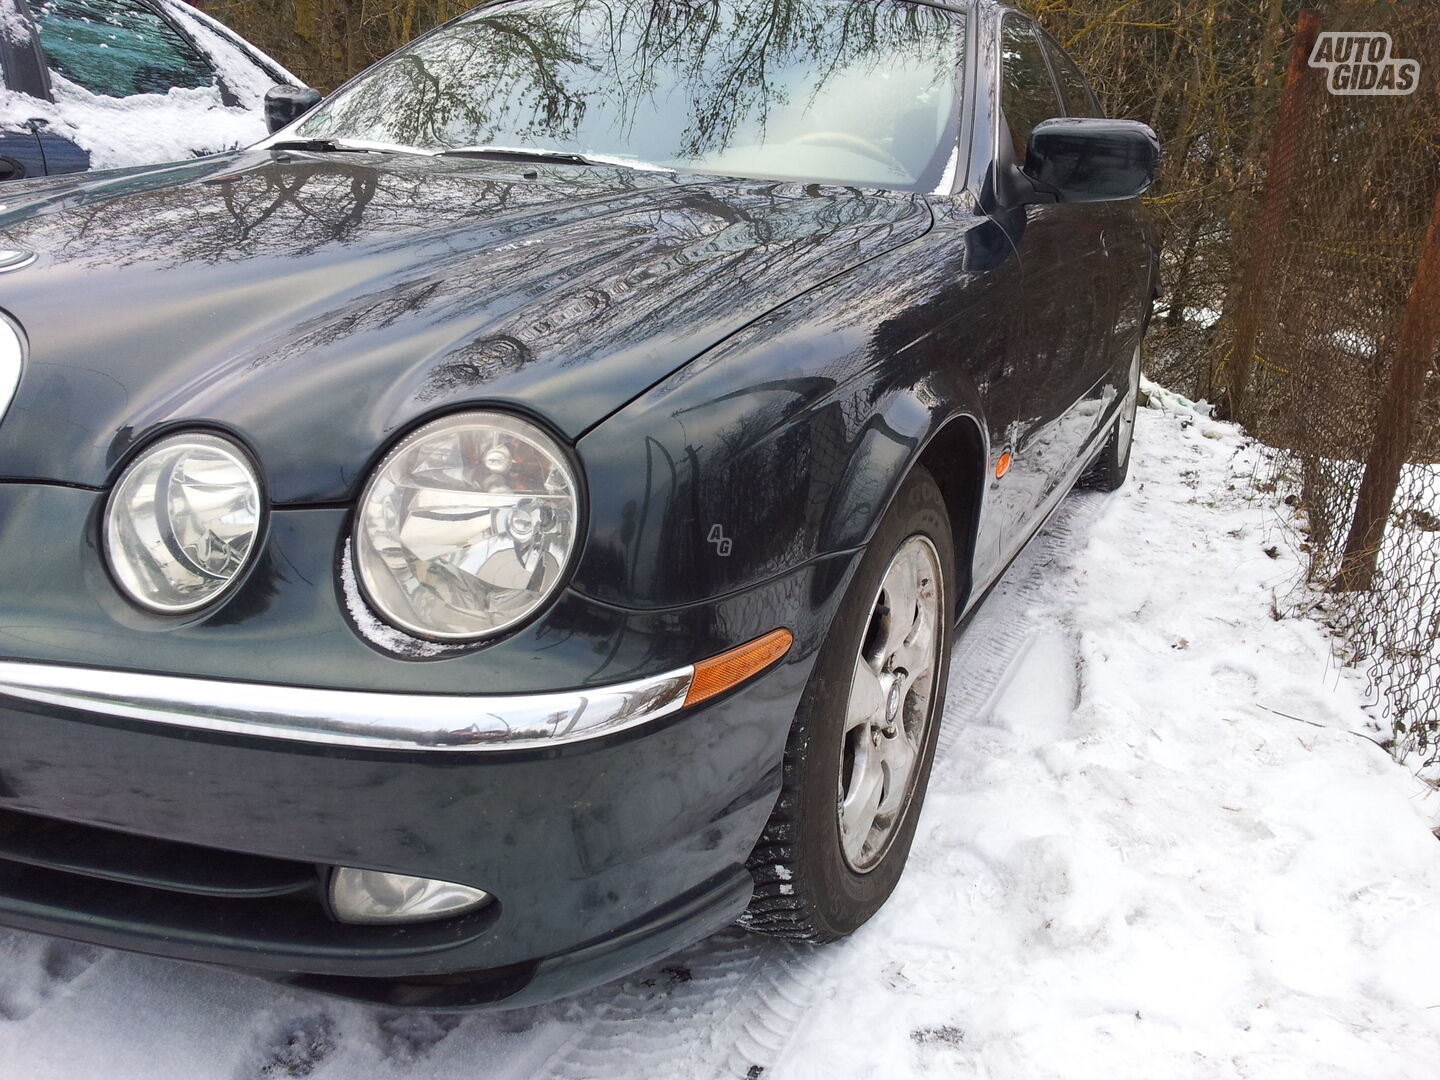 Jaguar S-Type 2001 г запчясти